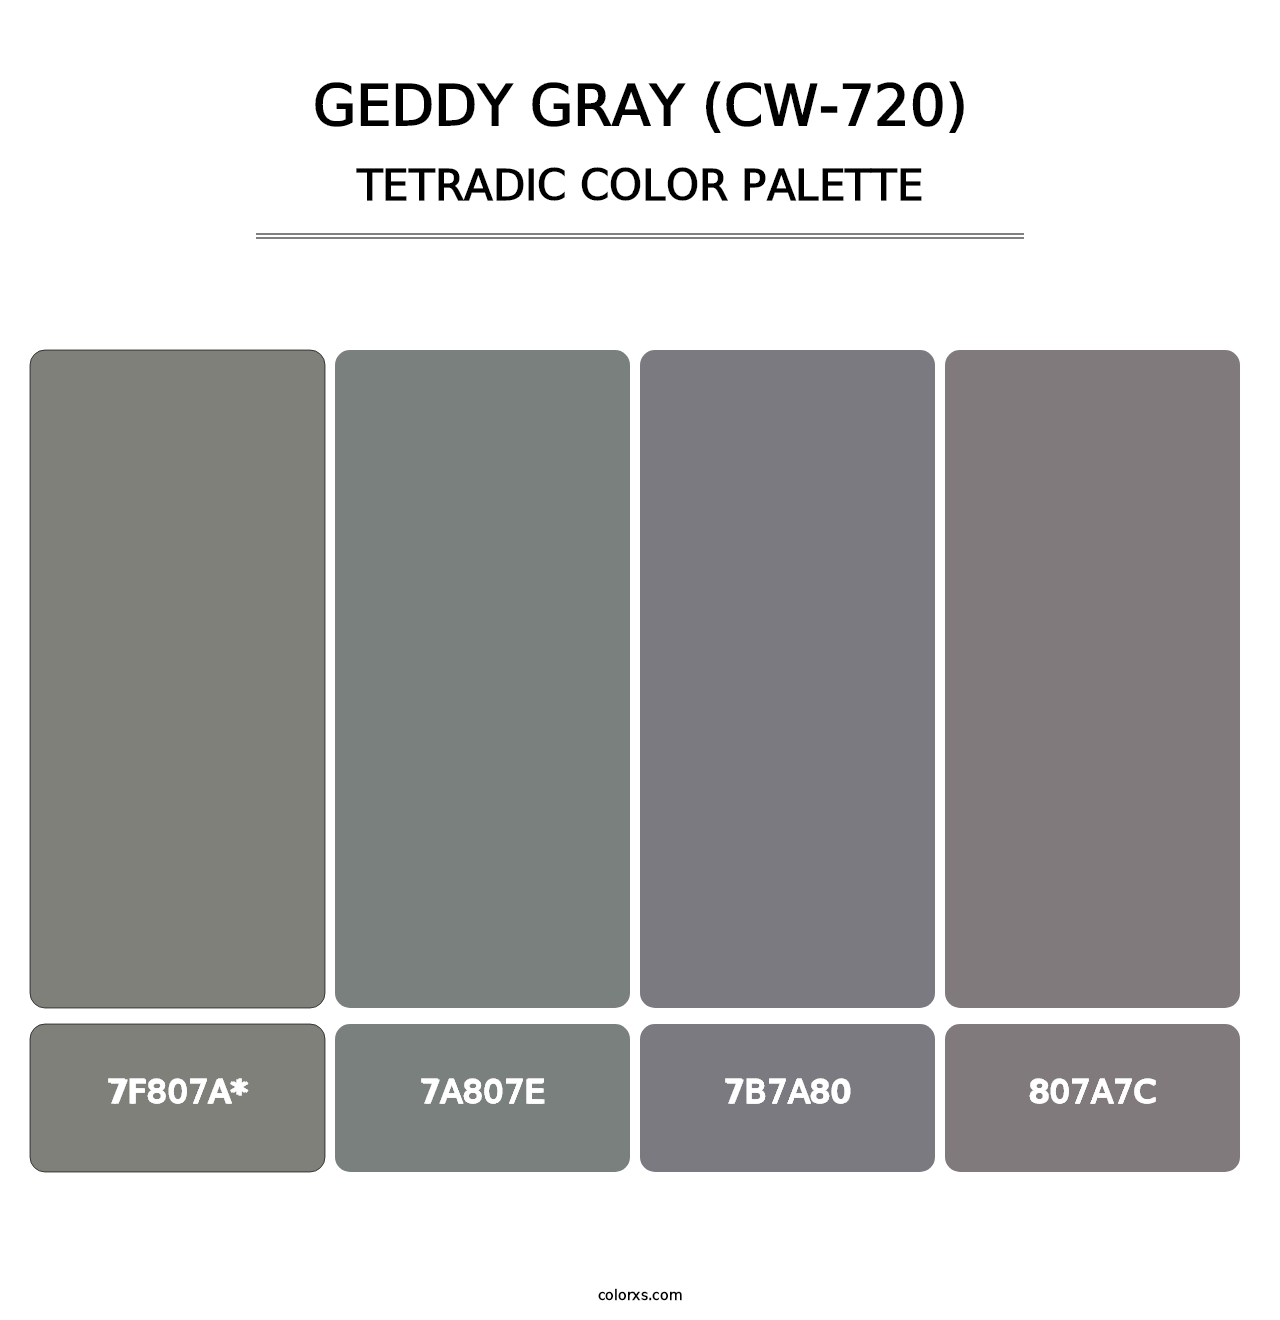 Geddy Gray (CW-720) - Tetradic Color Palette